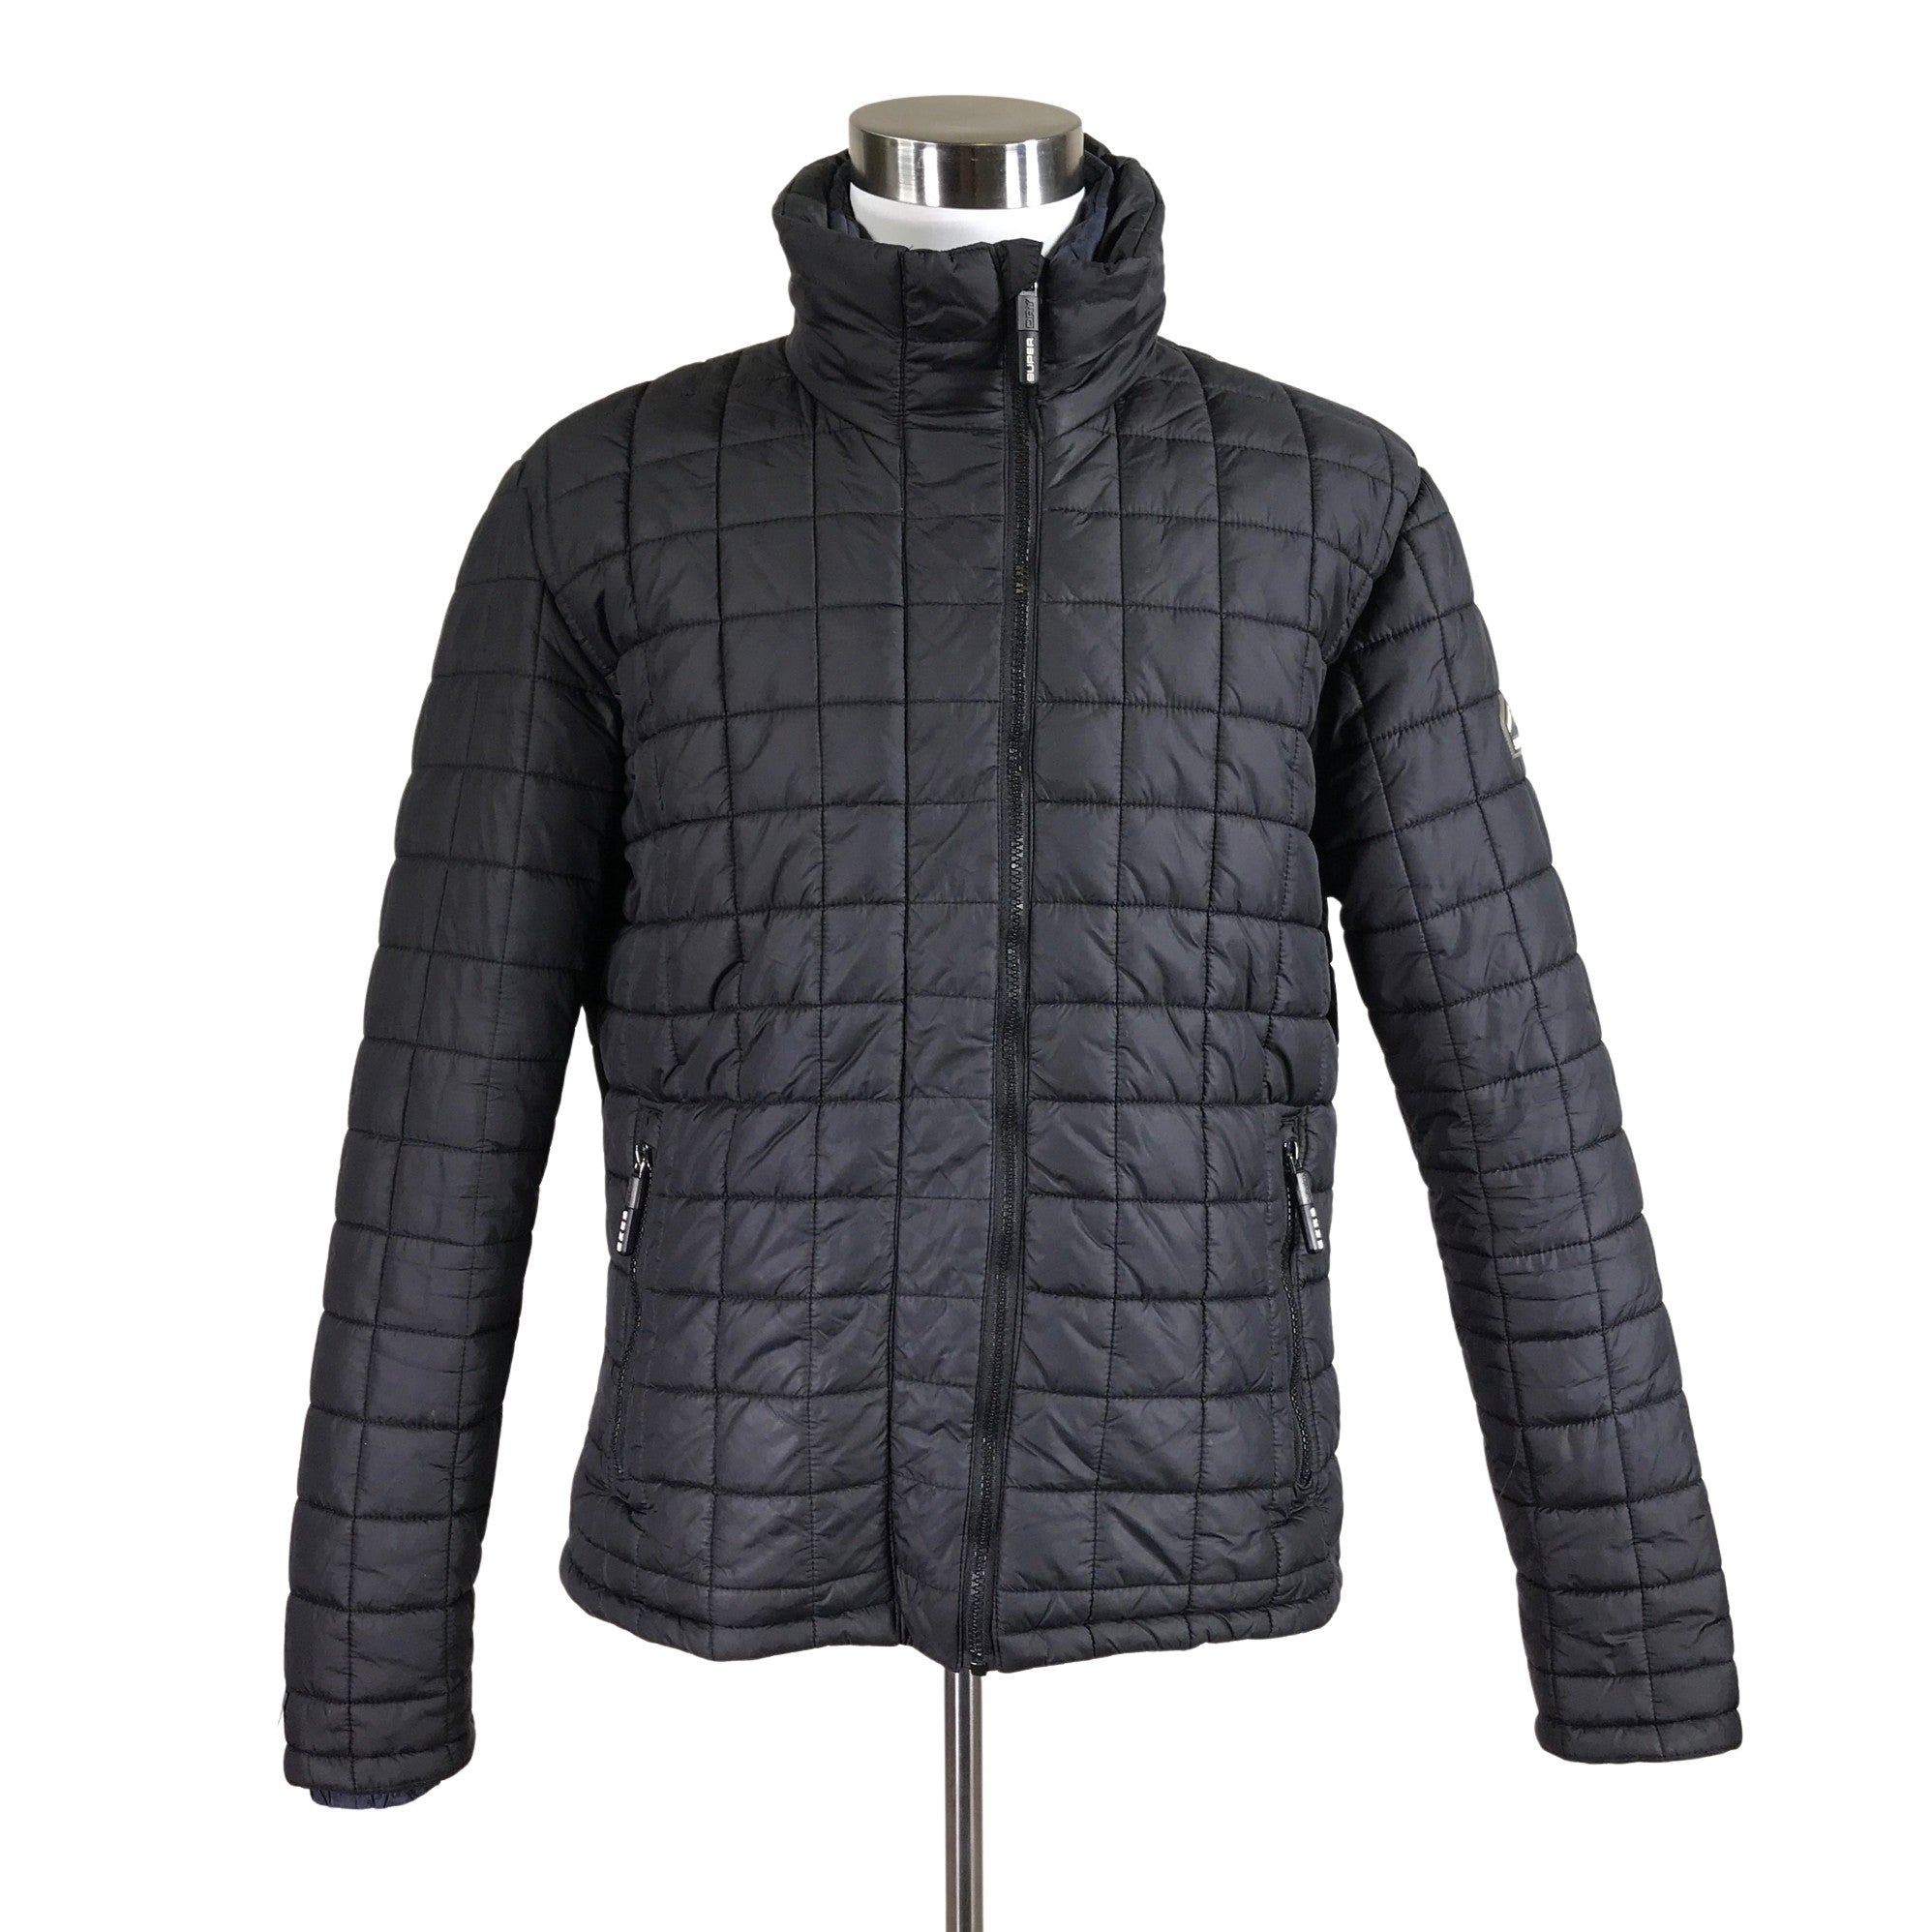 alcohol Bediening mogelijk Schurk Men's Superdry Winter jacket, size XL (Black) | Emmy